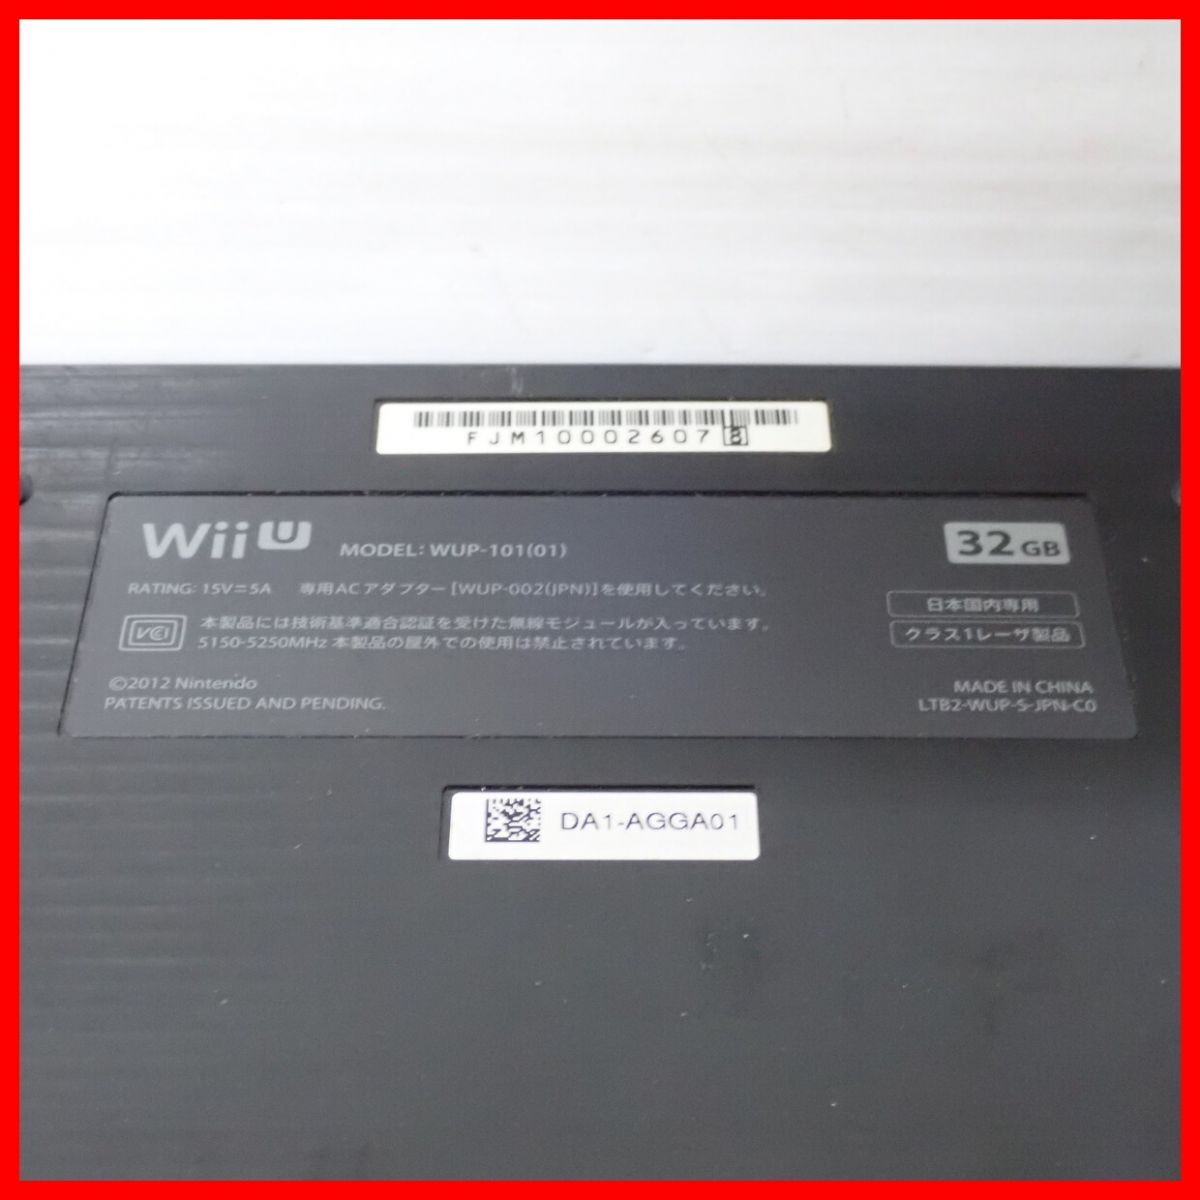  operation goods WiiU 32GB body black Nintendo nintendo [20